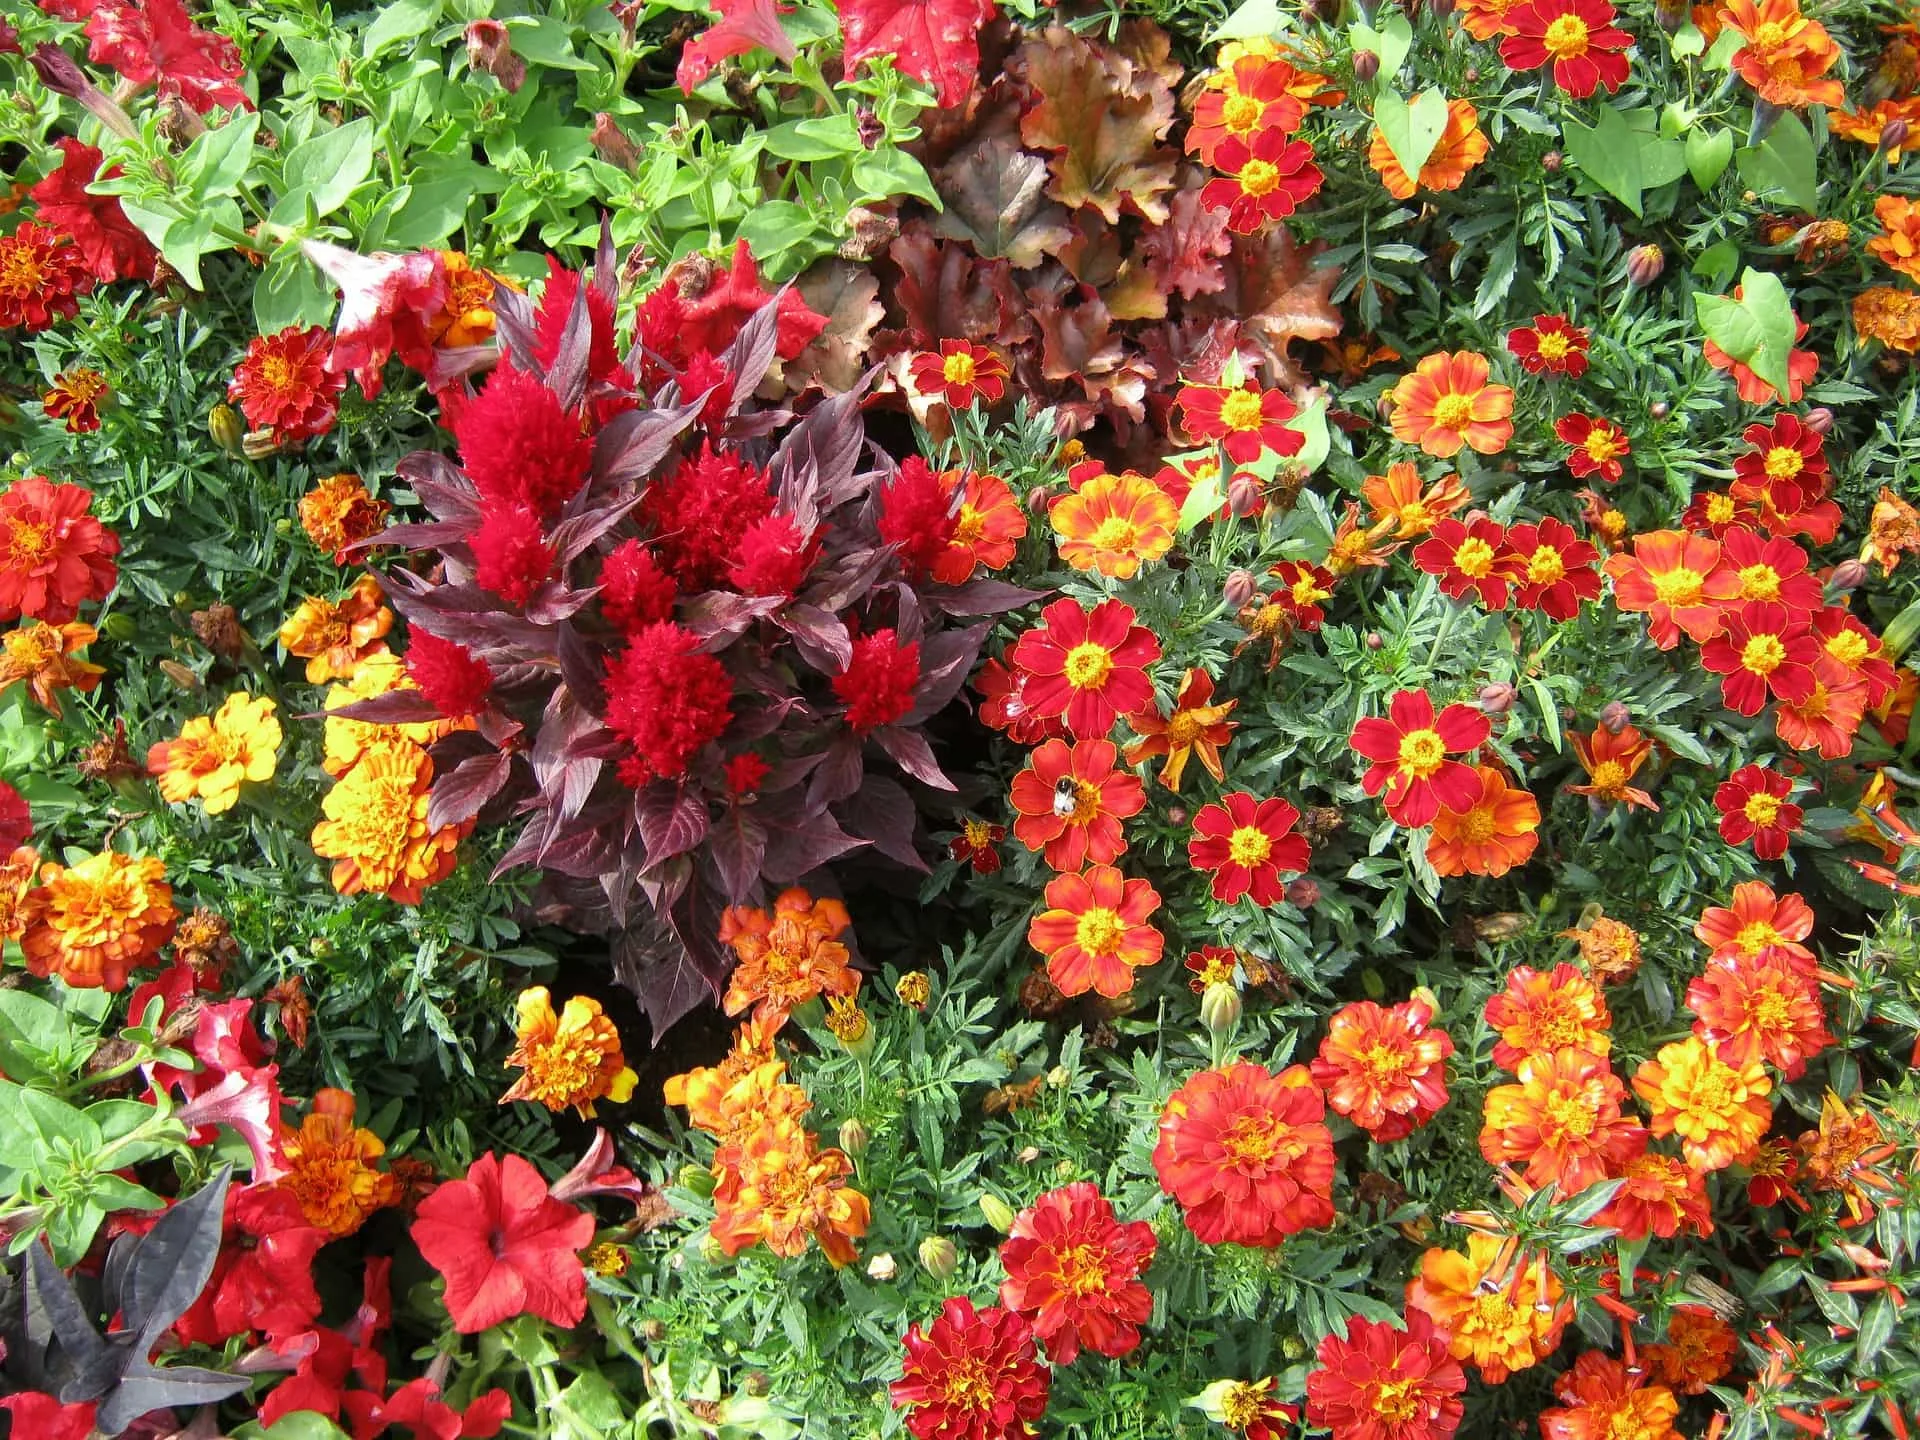 an abundance of red flowers in the garden